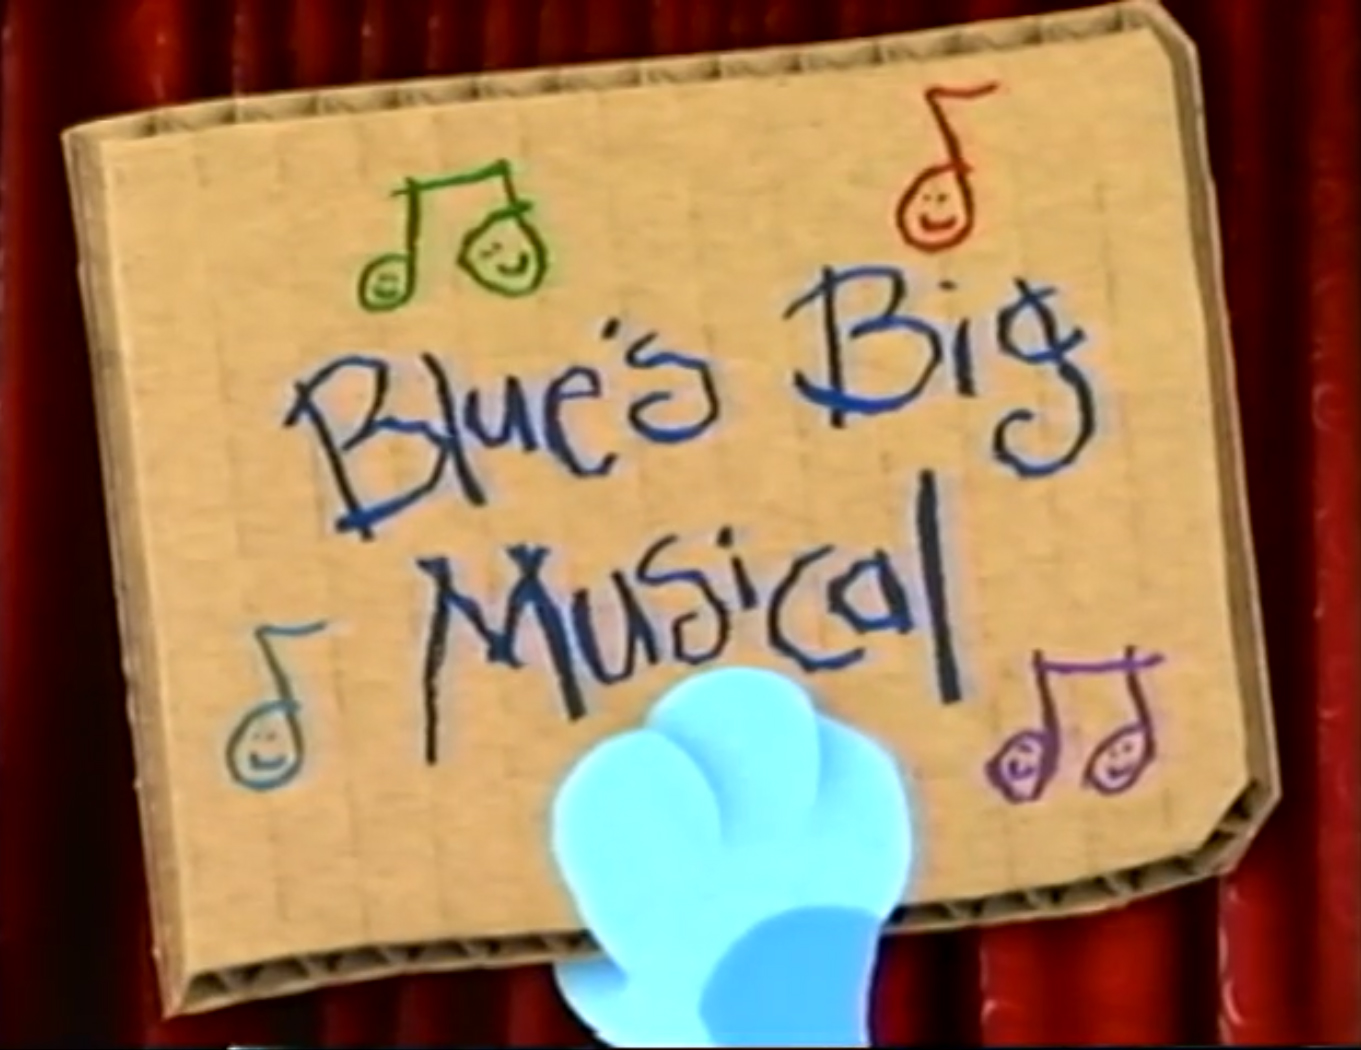 Blue's Big Musical | Blue's Clues Wiki | Fandom